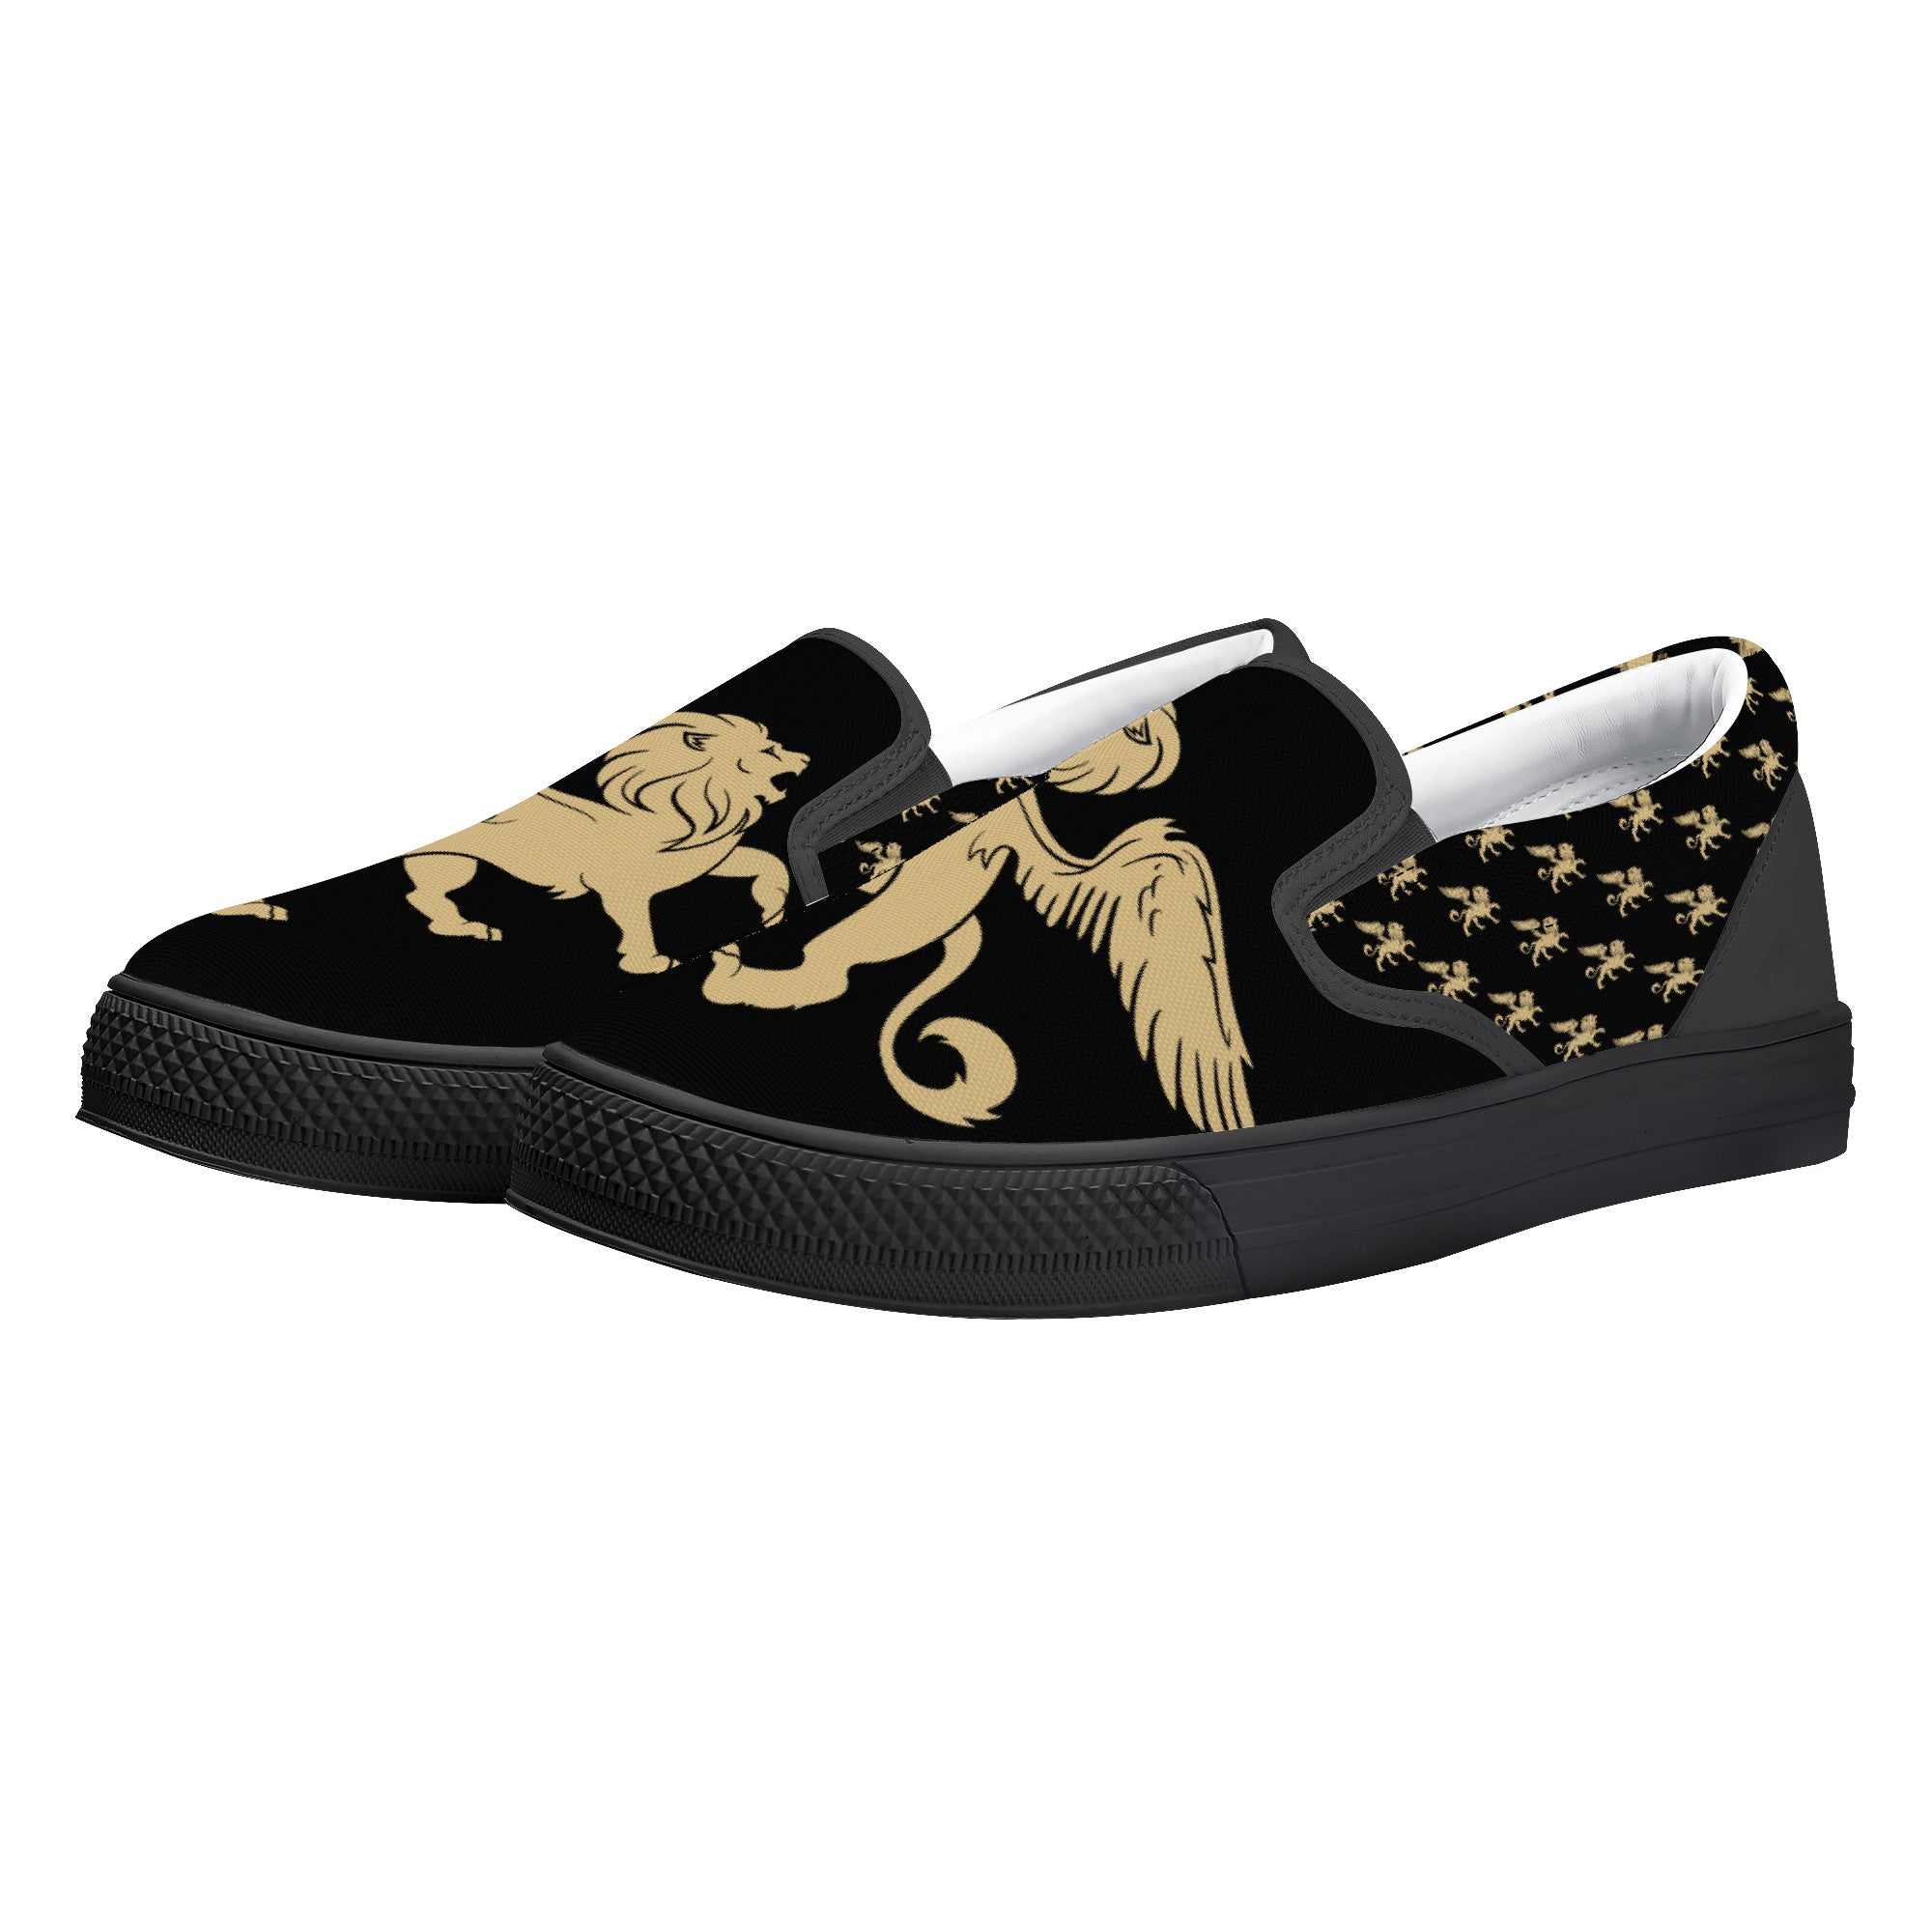 Lion Shoes V4 Slip-on Shoes | Low Top Customized | Shoe Zero